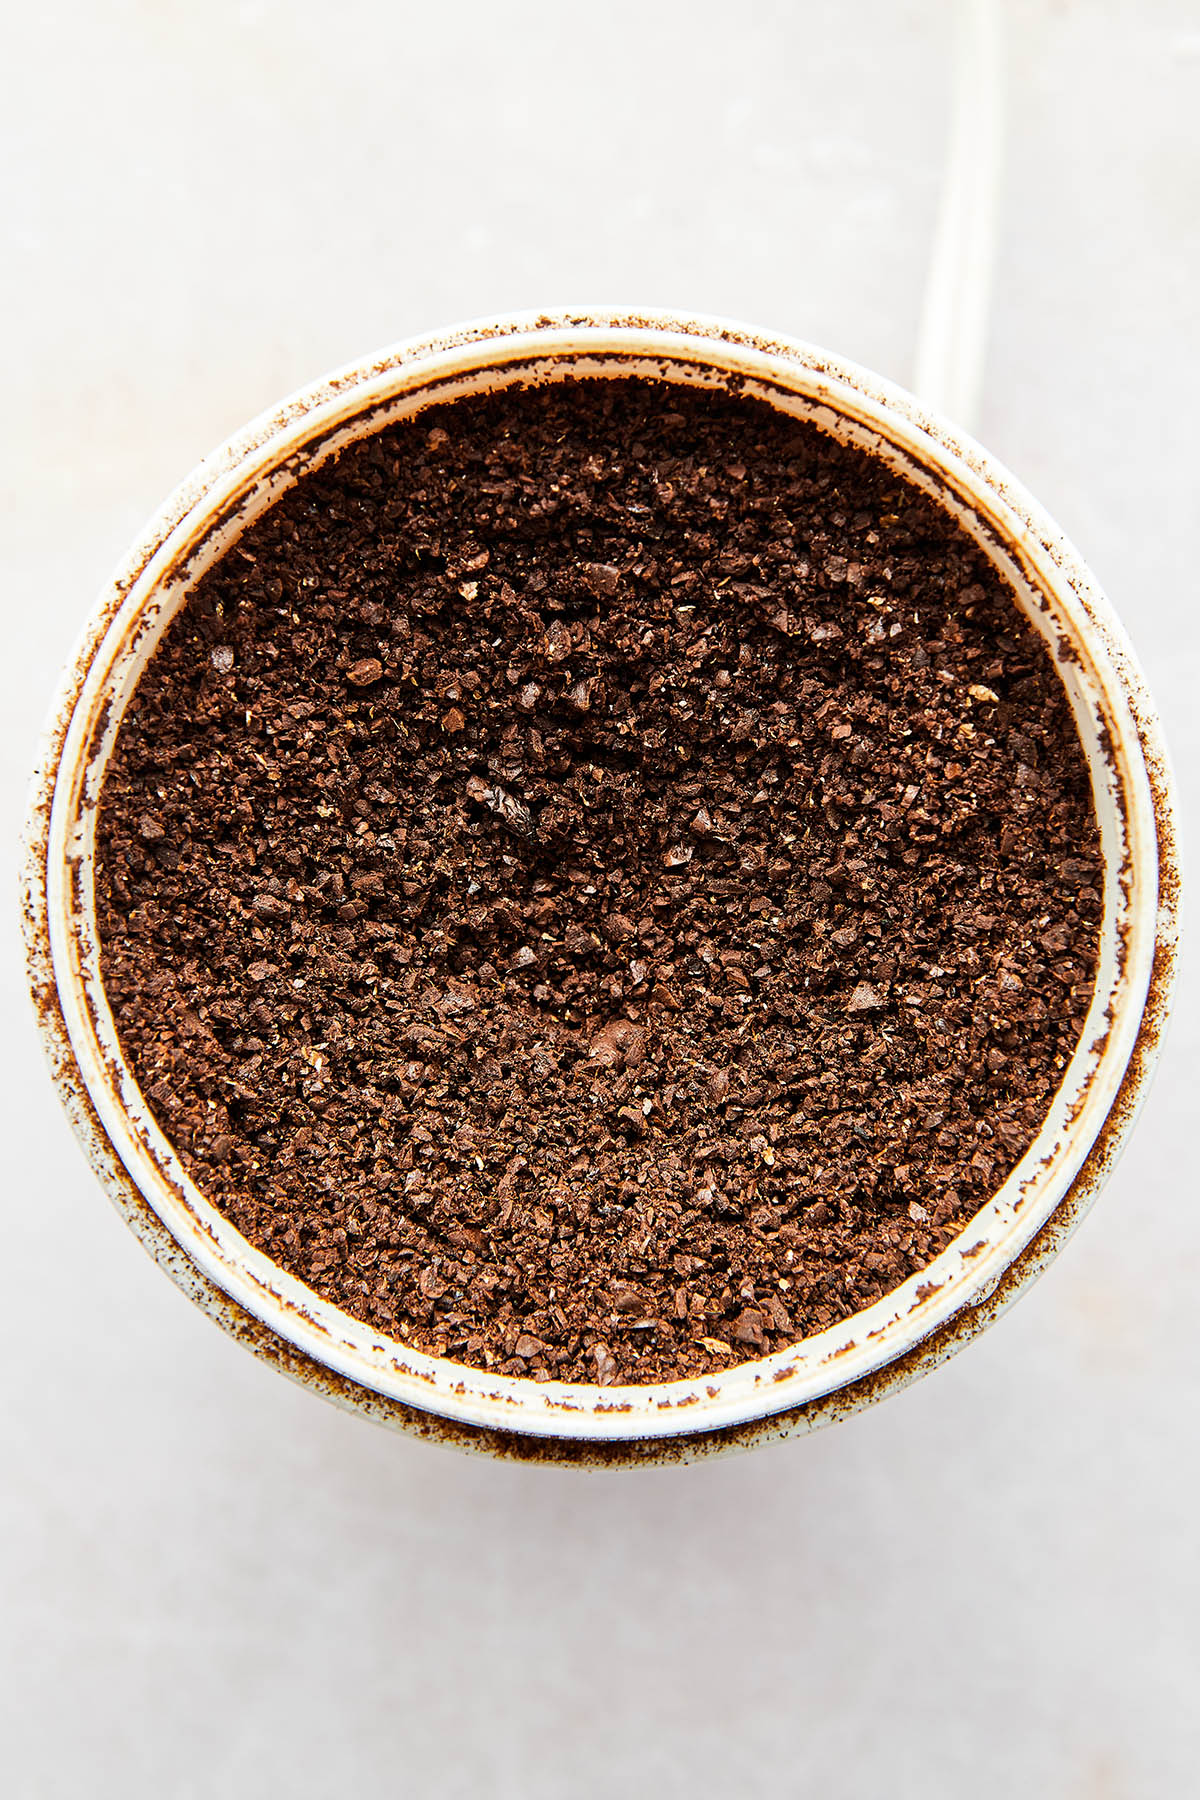 Coarse ground coffee inside a coffee grinder.